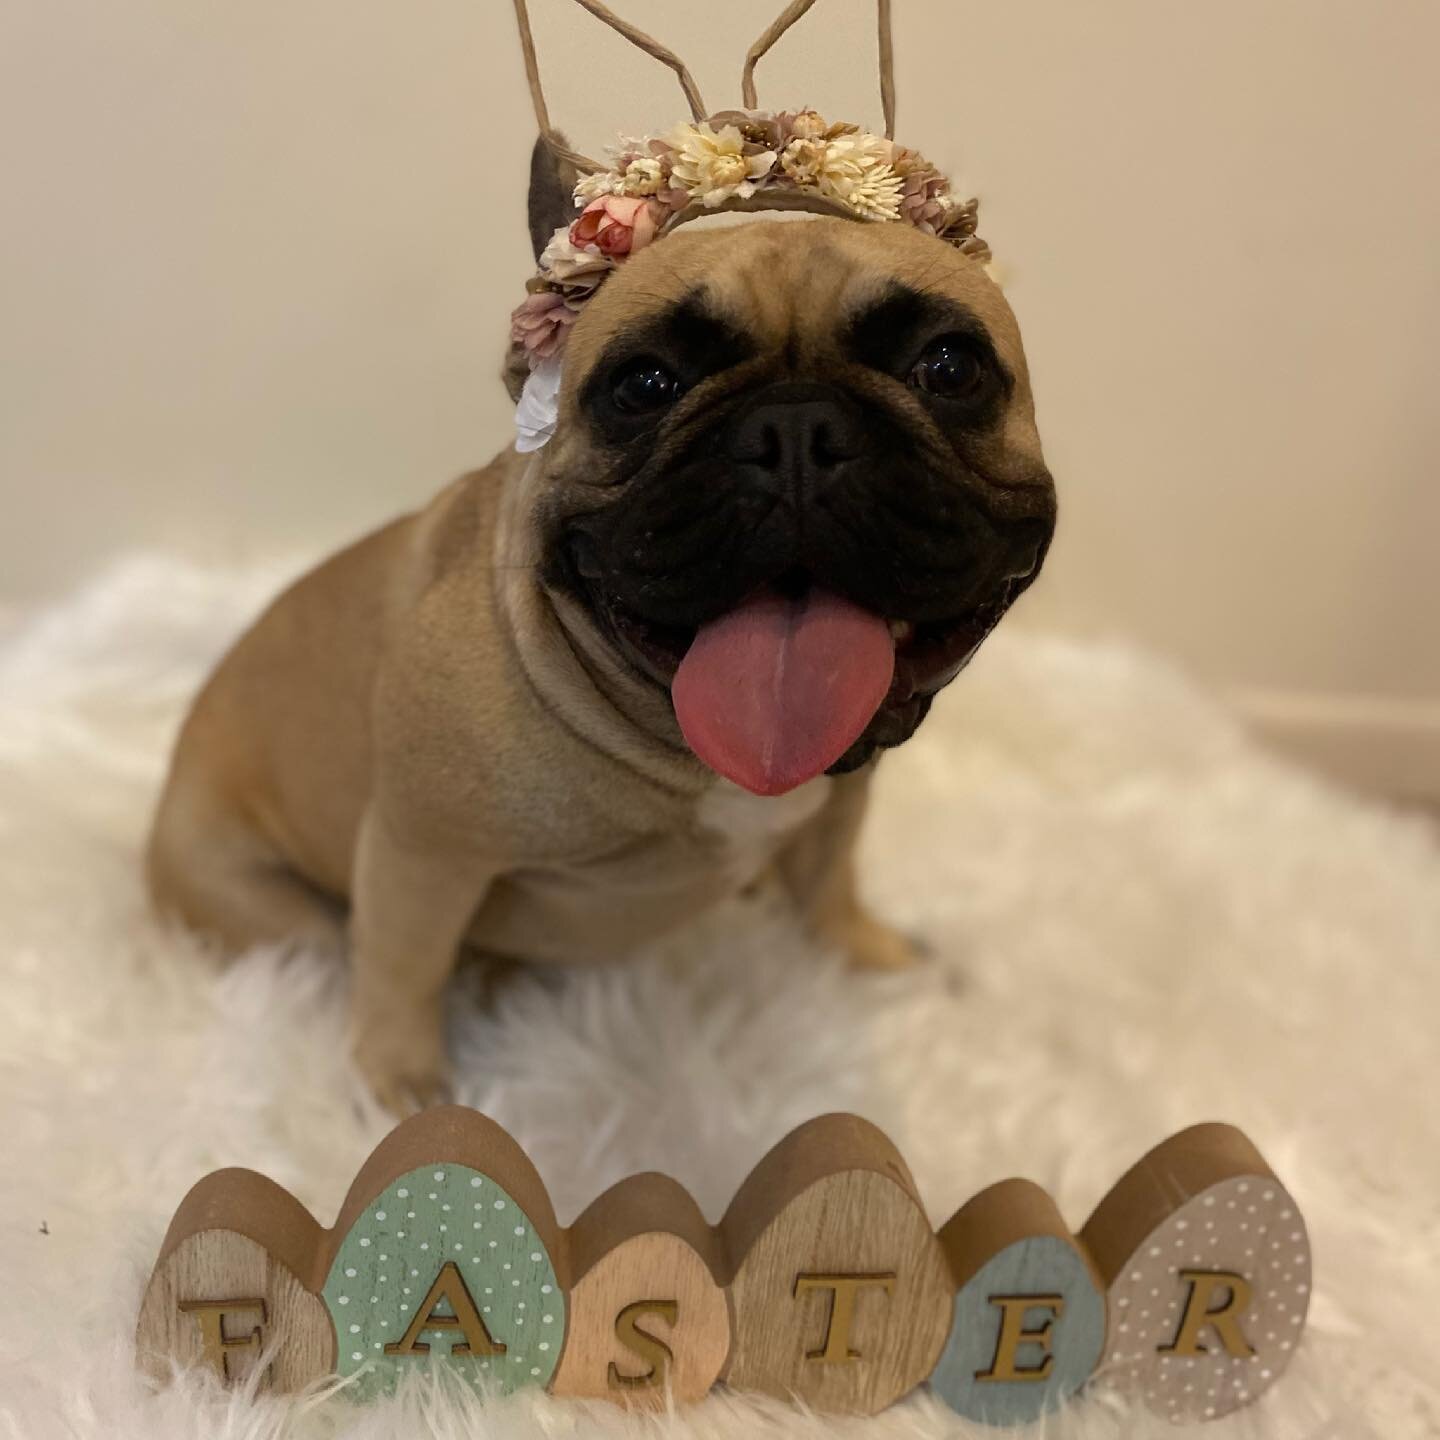 Happy Easter 🐣 From Highlander French Bulldogs 
.
.
.
.
.
.

#highlanderfrenchbulldogs #frenchie #fawn #fawnfrenchies #dogoftheday #frenchiesofinstgram
#frenchiesquad #anckfrenchbulldog 
#frenchbulldogbreeder #purebred
#frenchiepuppy #puppylove 
#pu